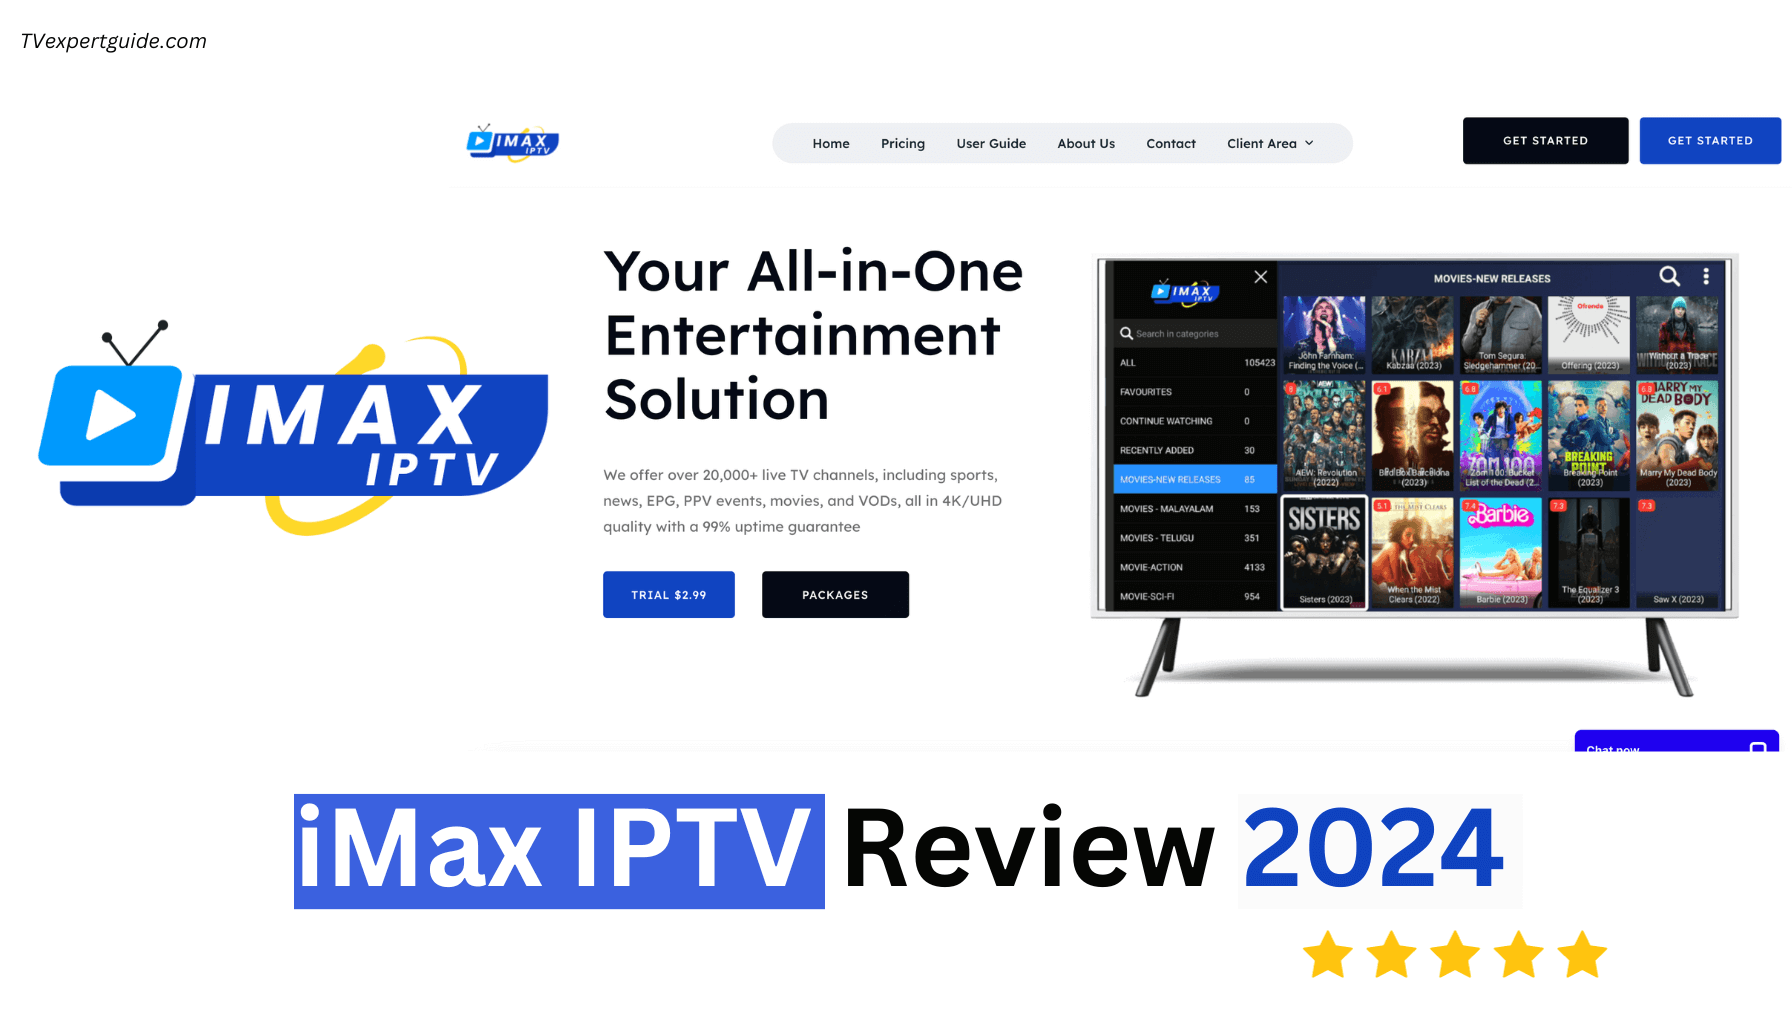 iMax-IPTV-Review